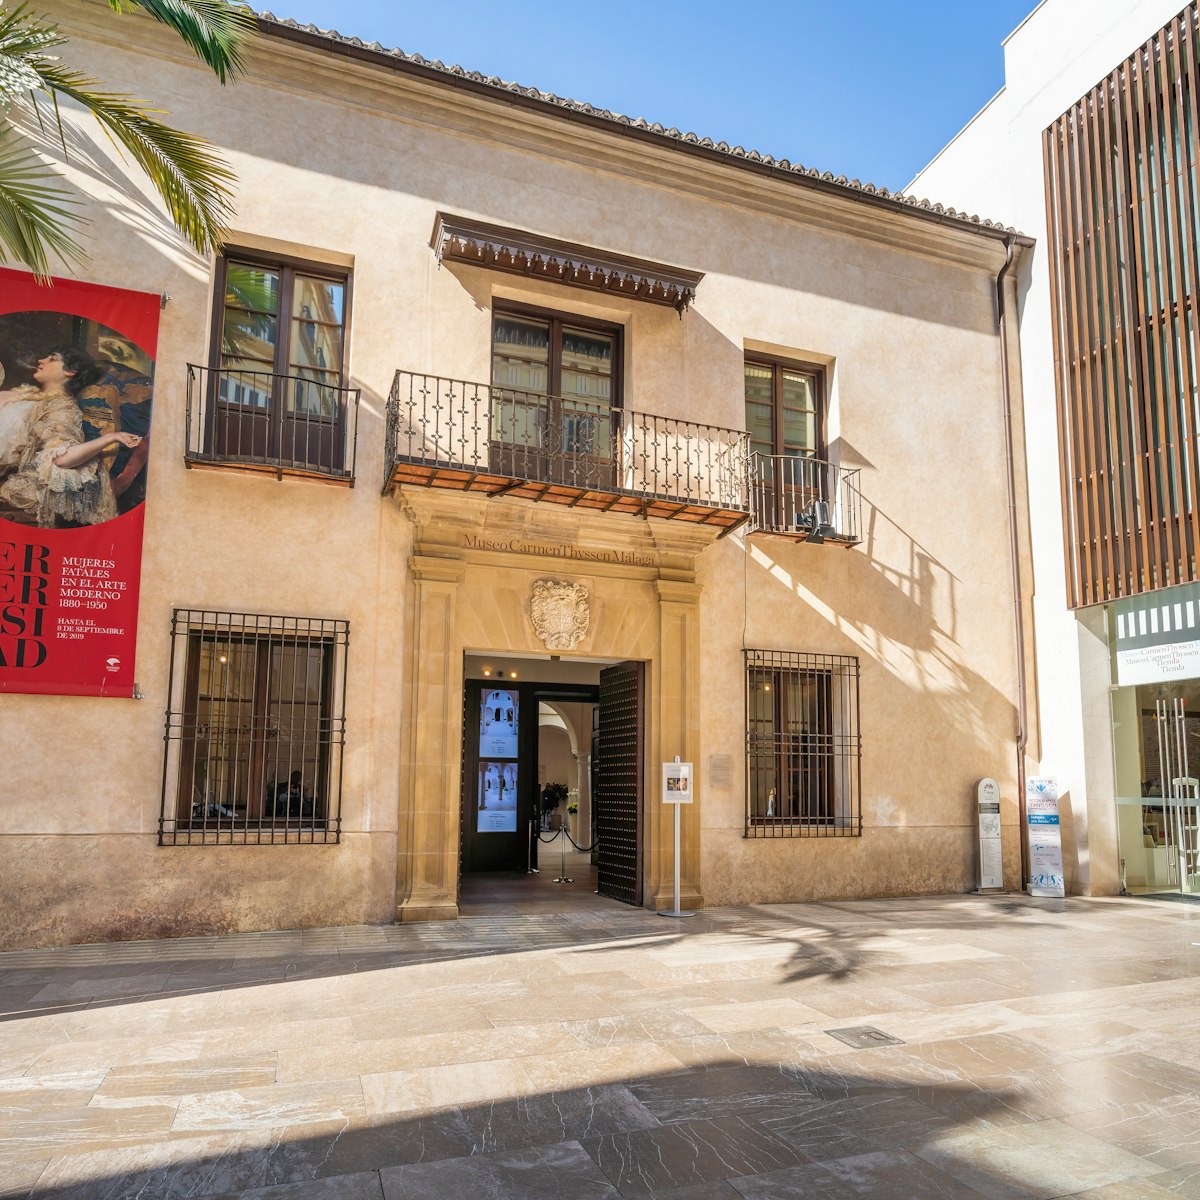 Carmen Thyssen Museum in Malaga, Spain.